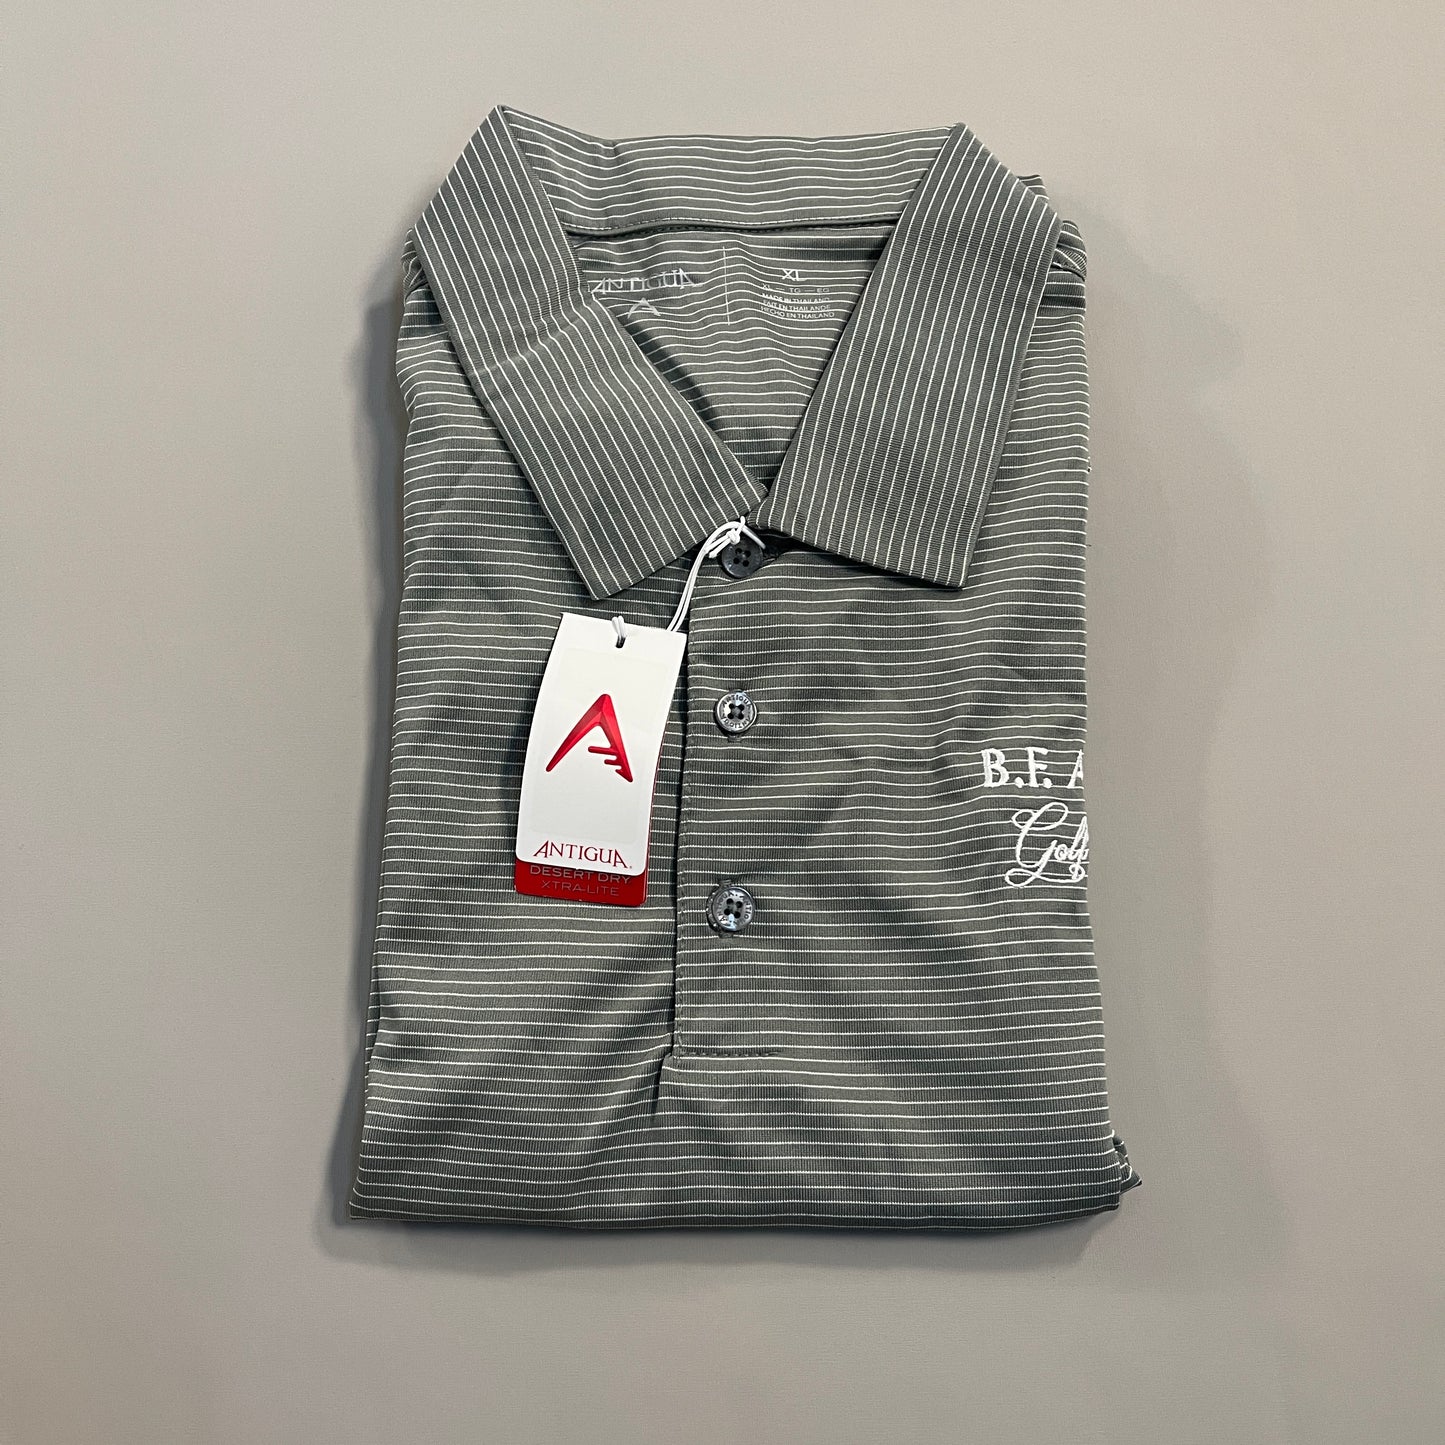 ANTIGUA Quest Auto Stripe Polo Shirt “B.F. Adams Golf Classic” Men's Sz XL Steel/White (New)